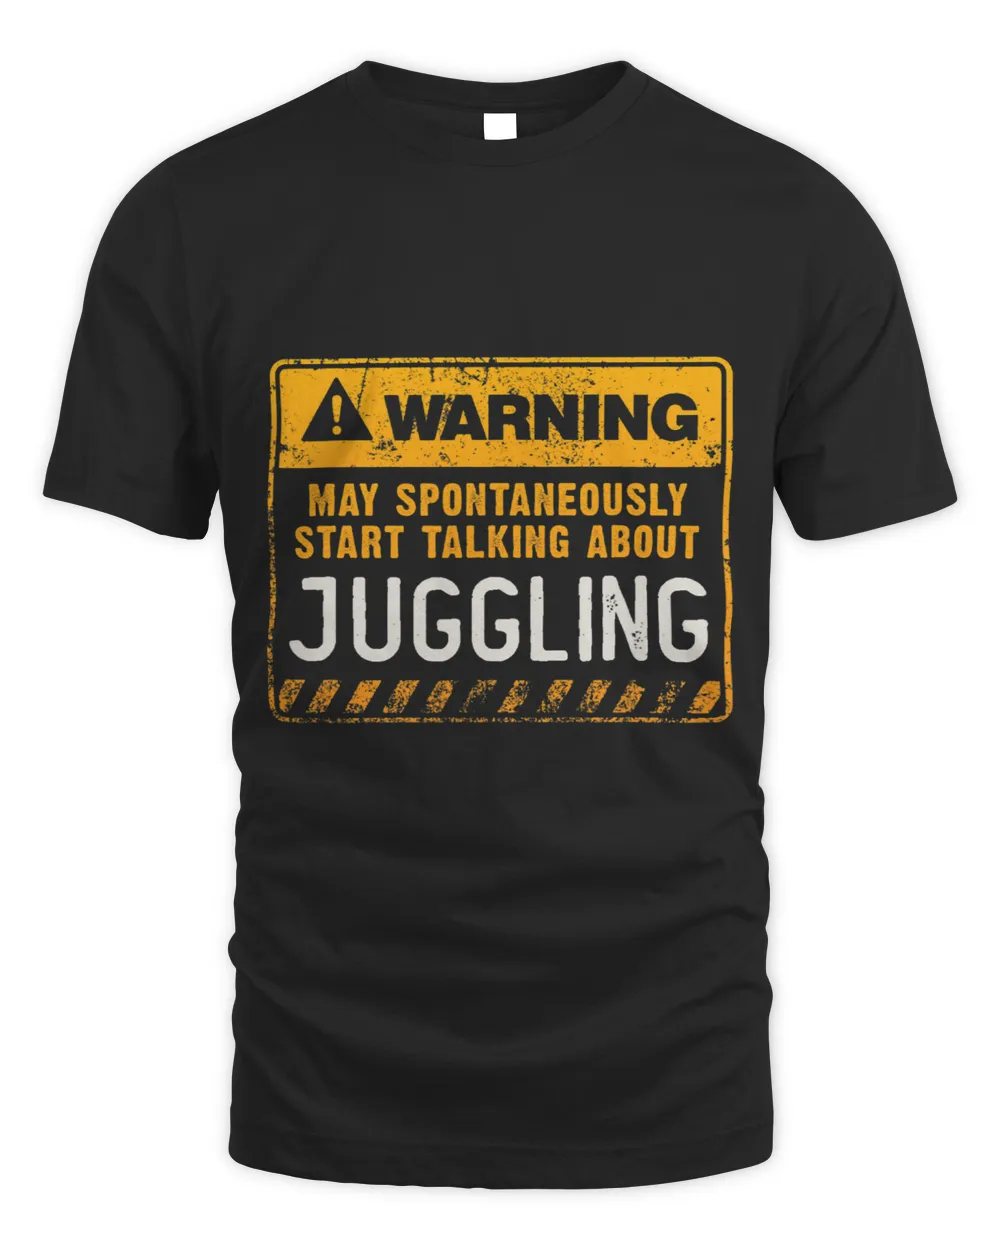 JUGGLING FUNNY WARNING SIGN